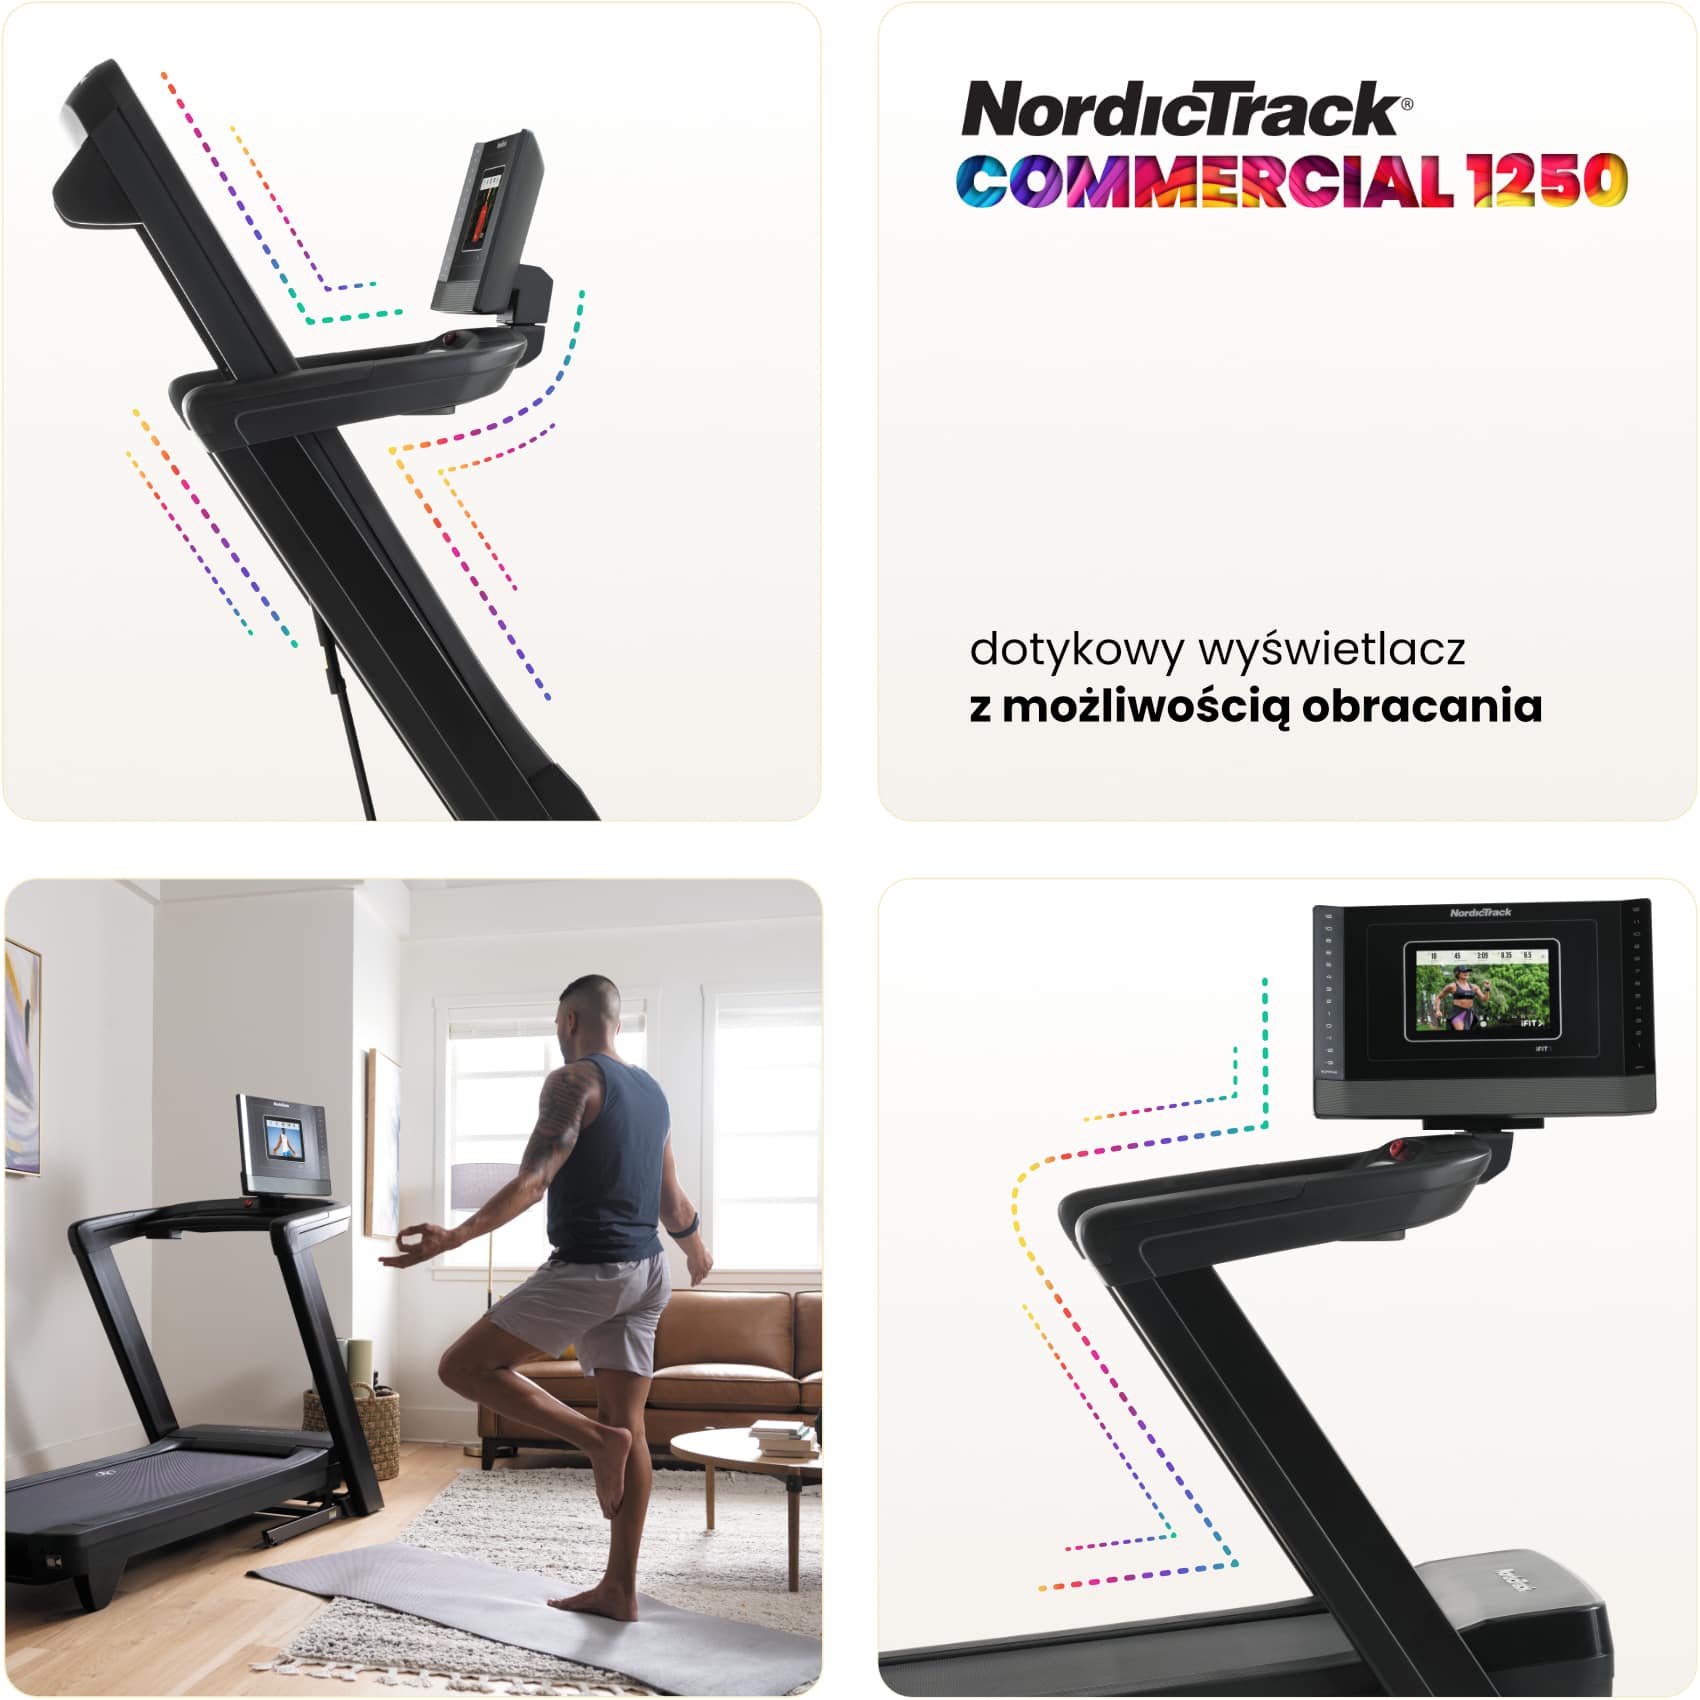 NordicTrack 1250